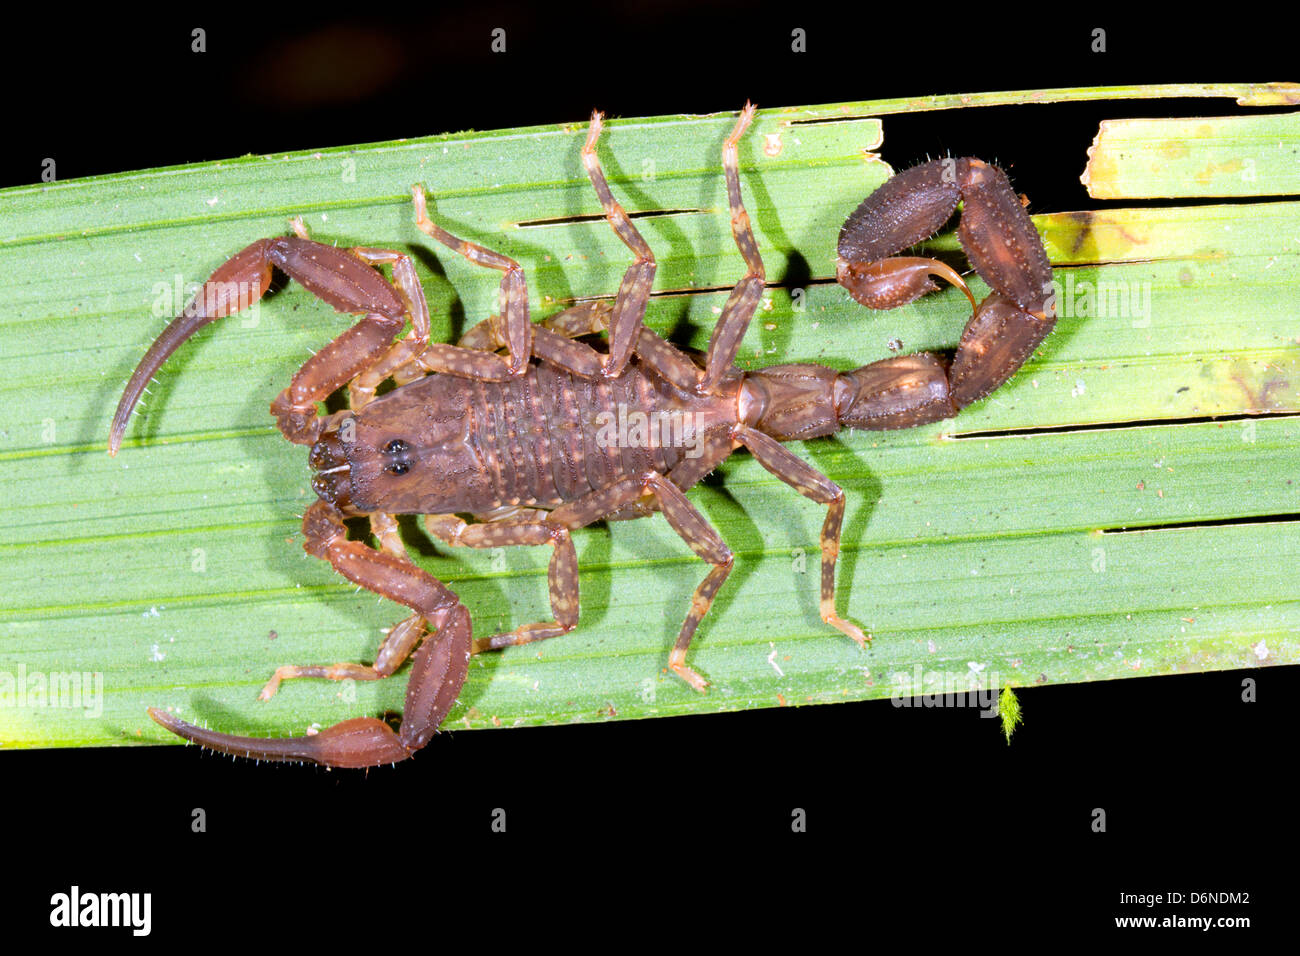 Scorpion on a palm leaf in rainforest, Ecuador Stock Photo